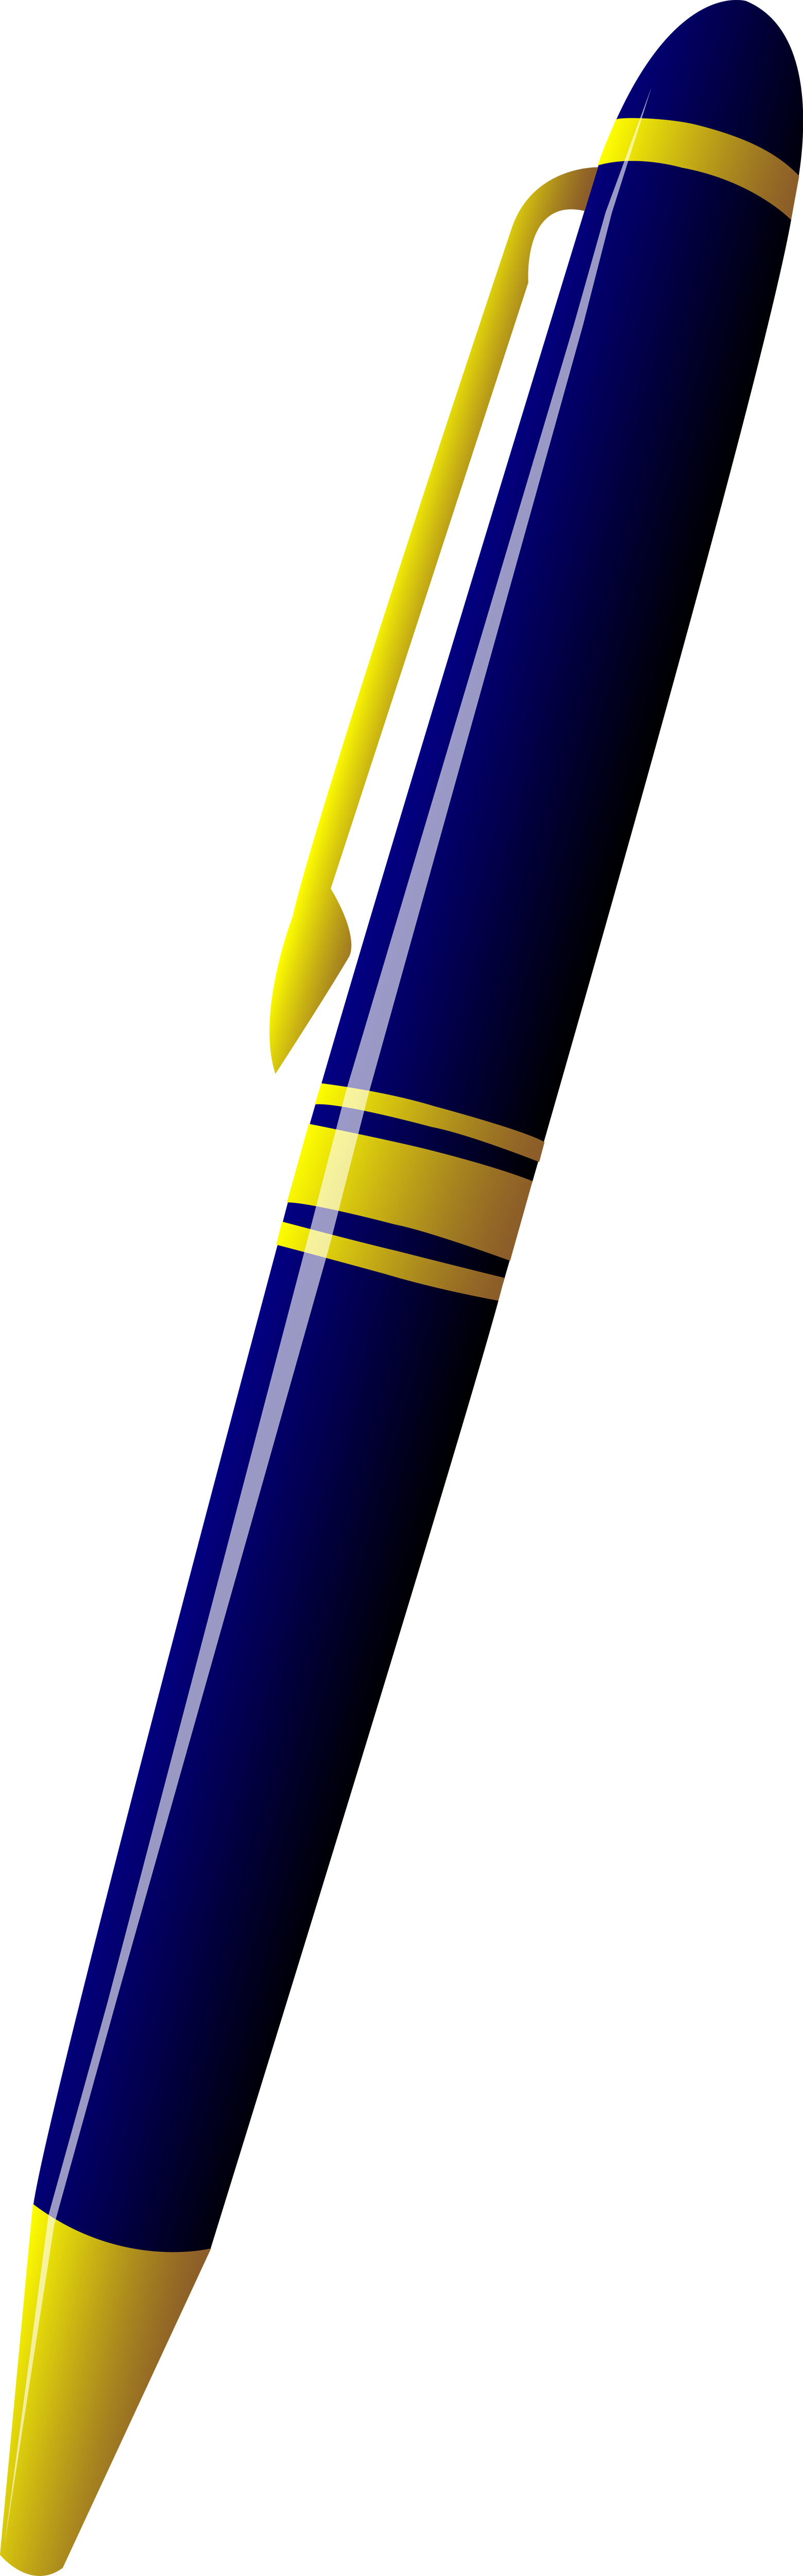 Cartoon Image Of Pen (1559x5000)